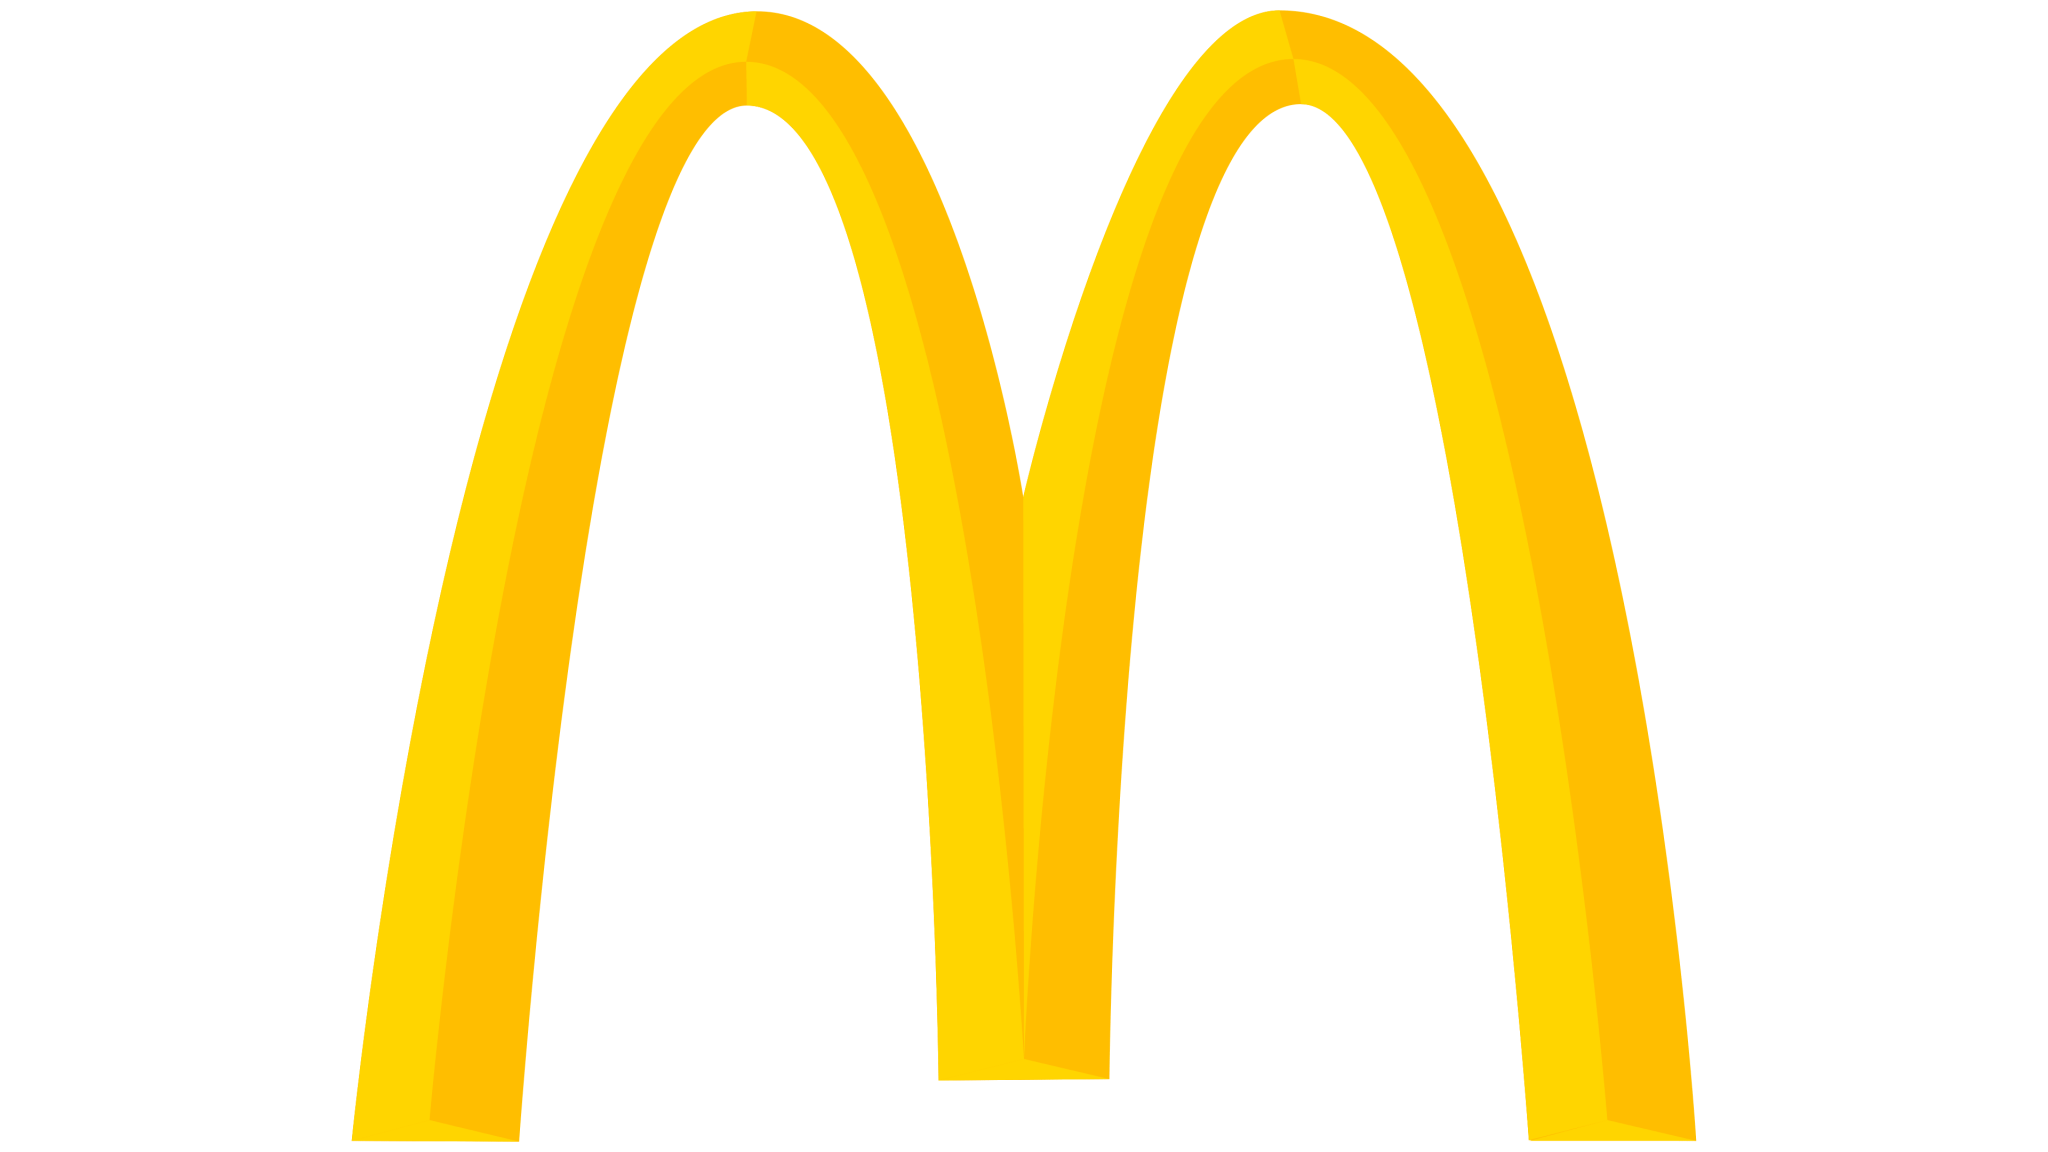 Mcdonald s logo. Макдоналдс логотип 2022. MCDONALDS лого 2021. Макдональдс logo 2020. Макдоналдс logo 2021.